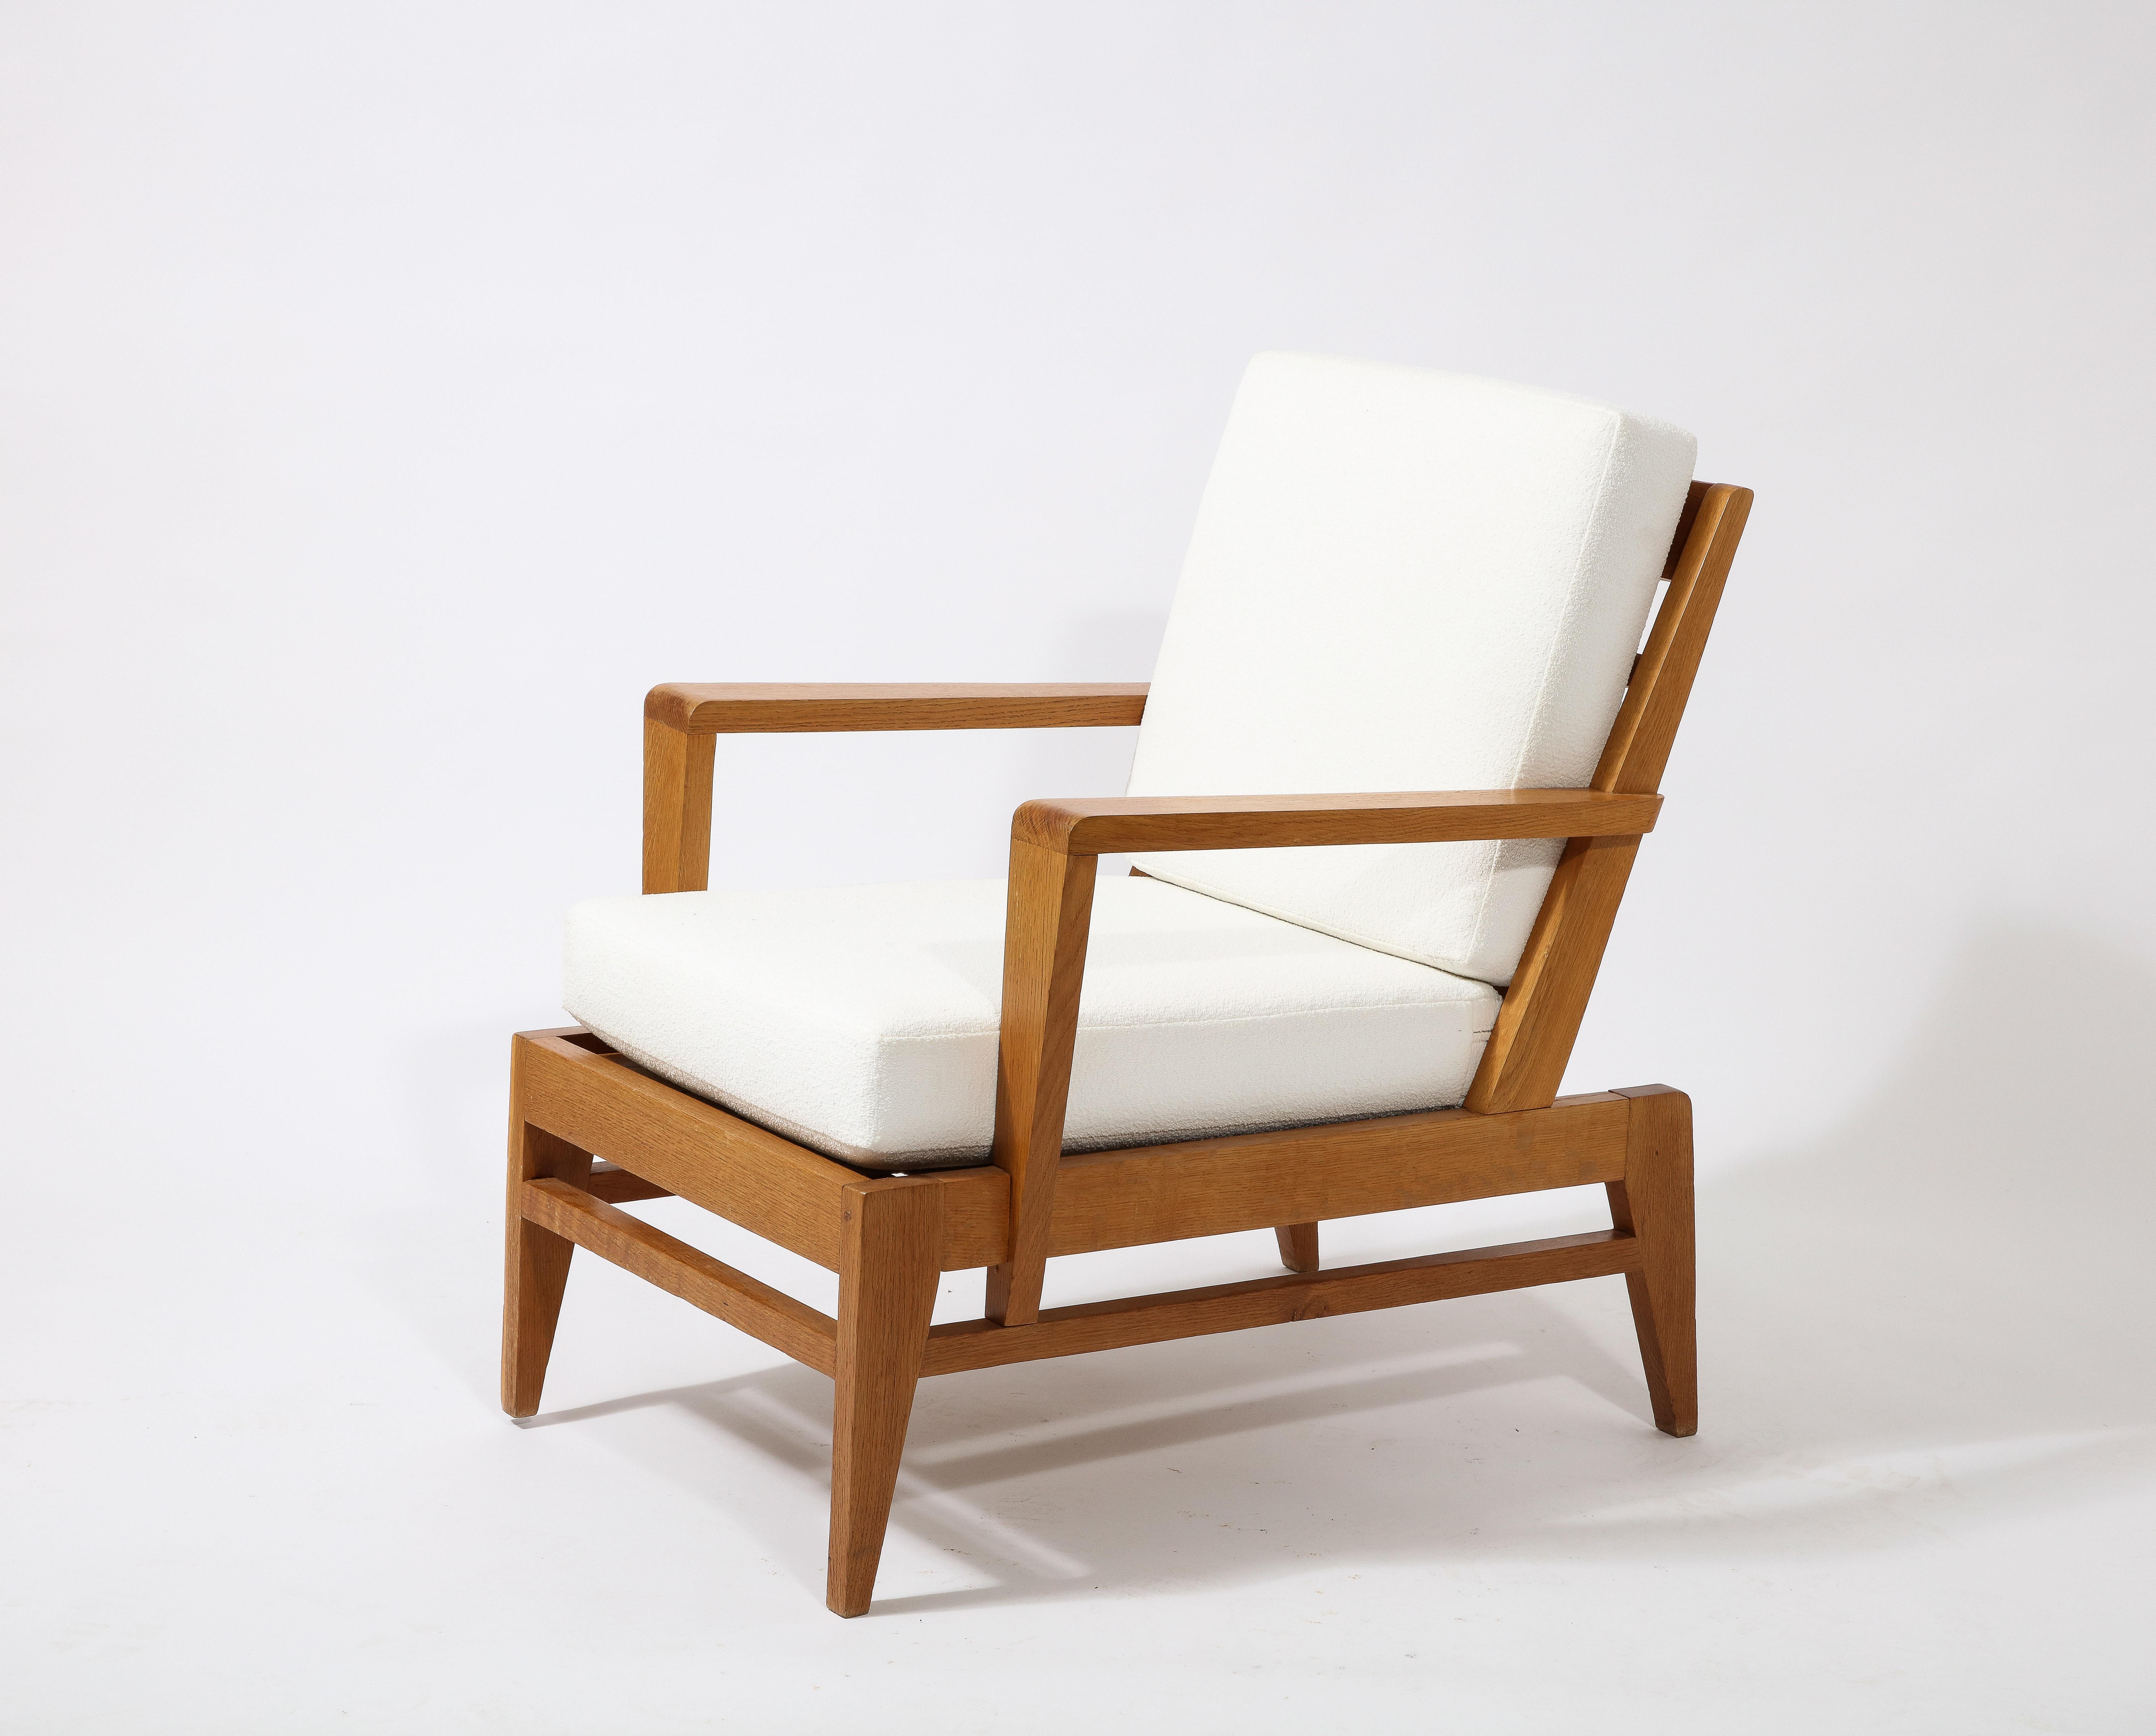 René Gabriel Pair of Oak Lounge Chairs Armchairs, France 1940’s For Sale 2